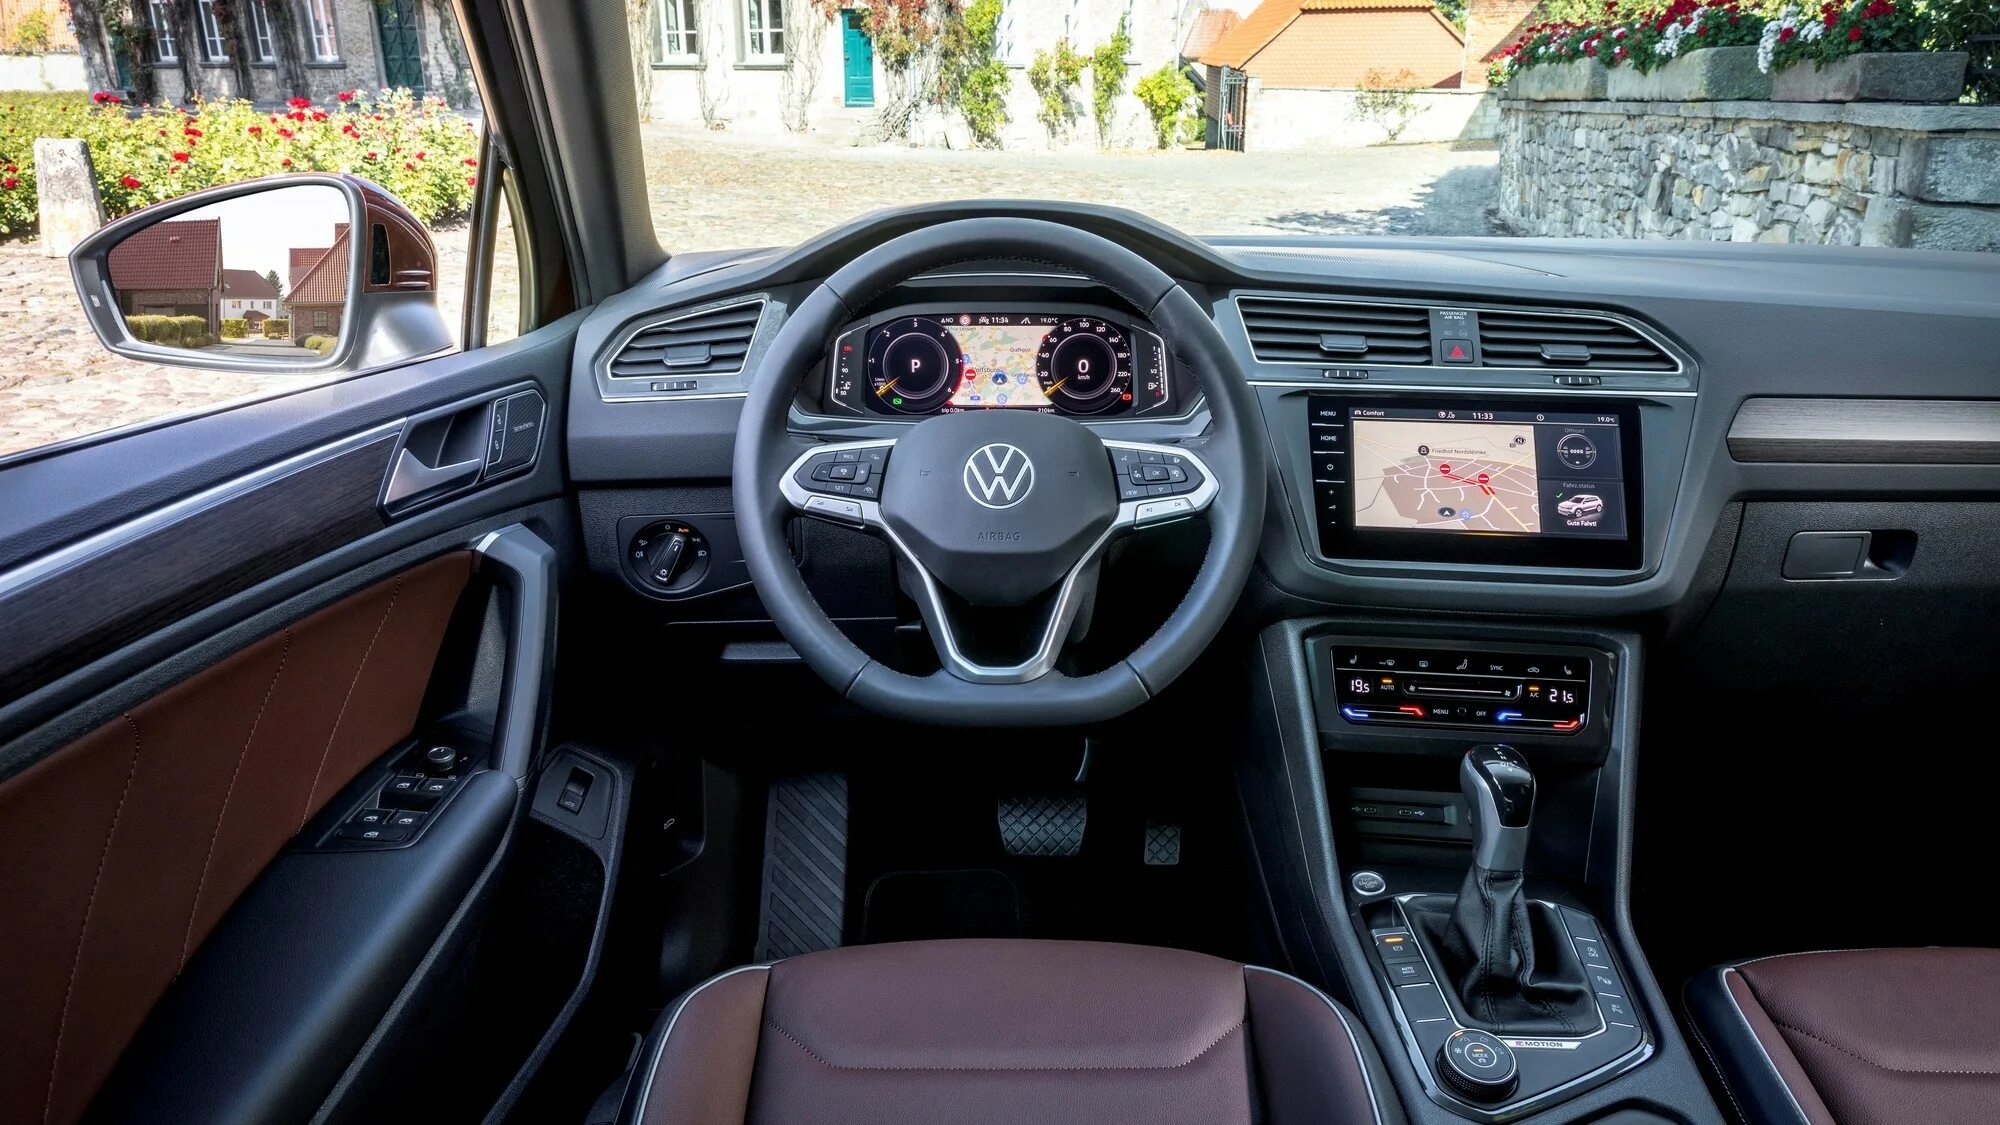 Volkswagen Tiguan 2021 Interior. Фольксваген Тигуан 2021 салон. VW Tiguan 2021. Volkswagen Tiguan 2021 салон. Volkswagen tiguan комплектации